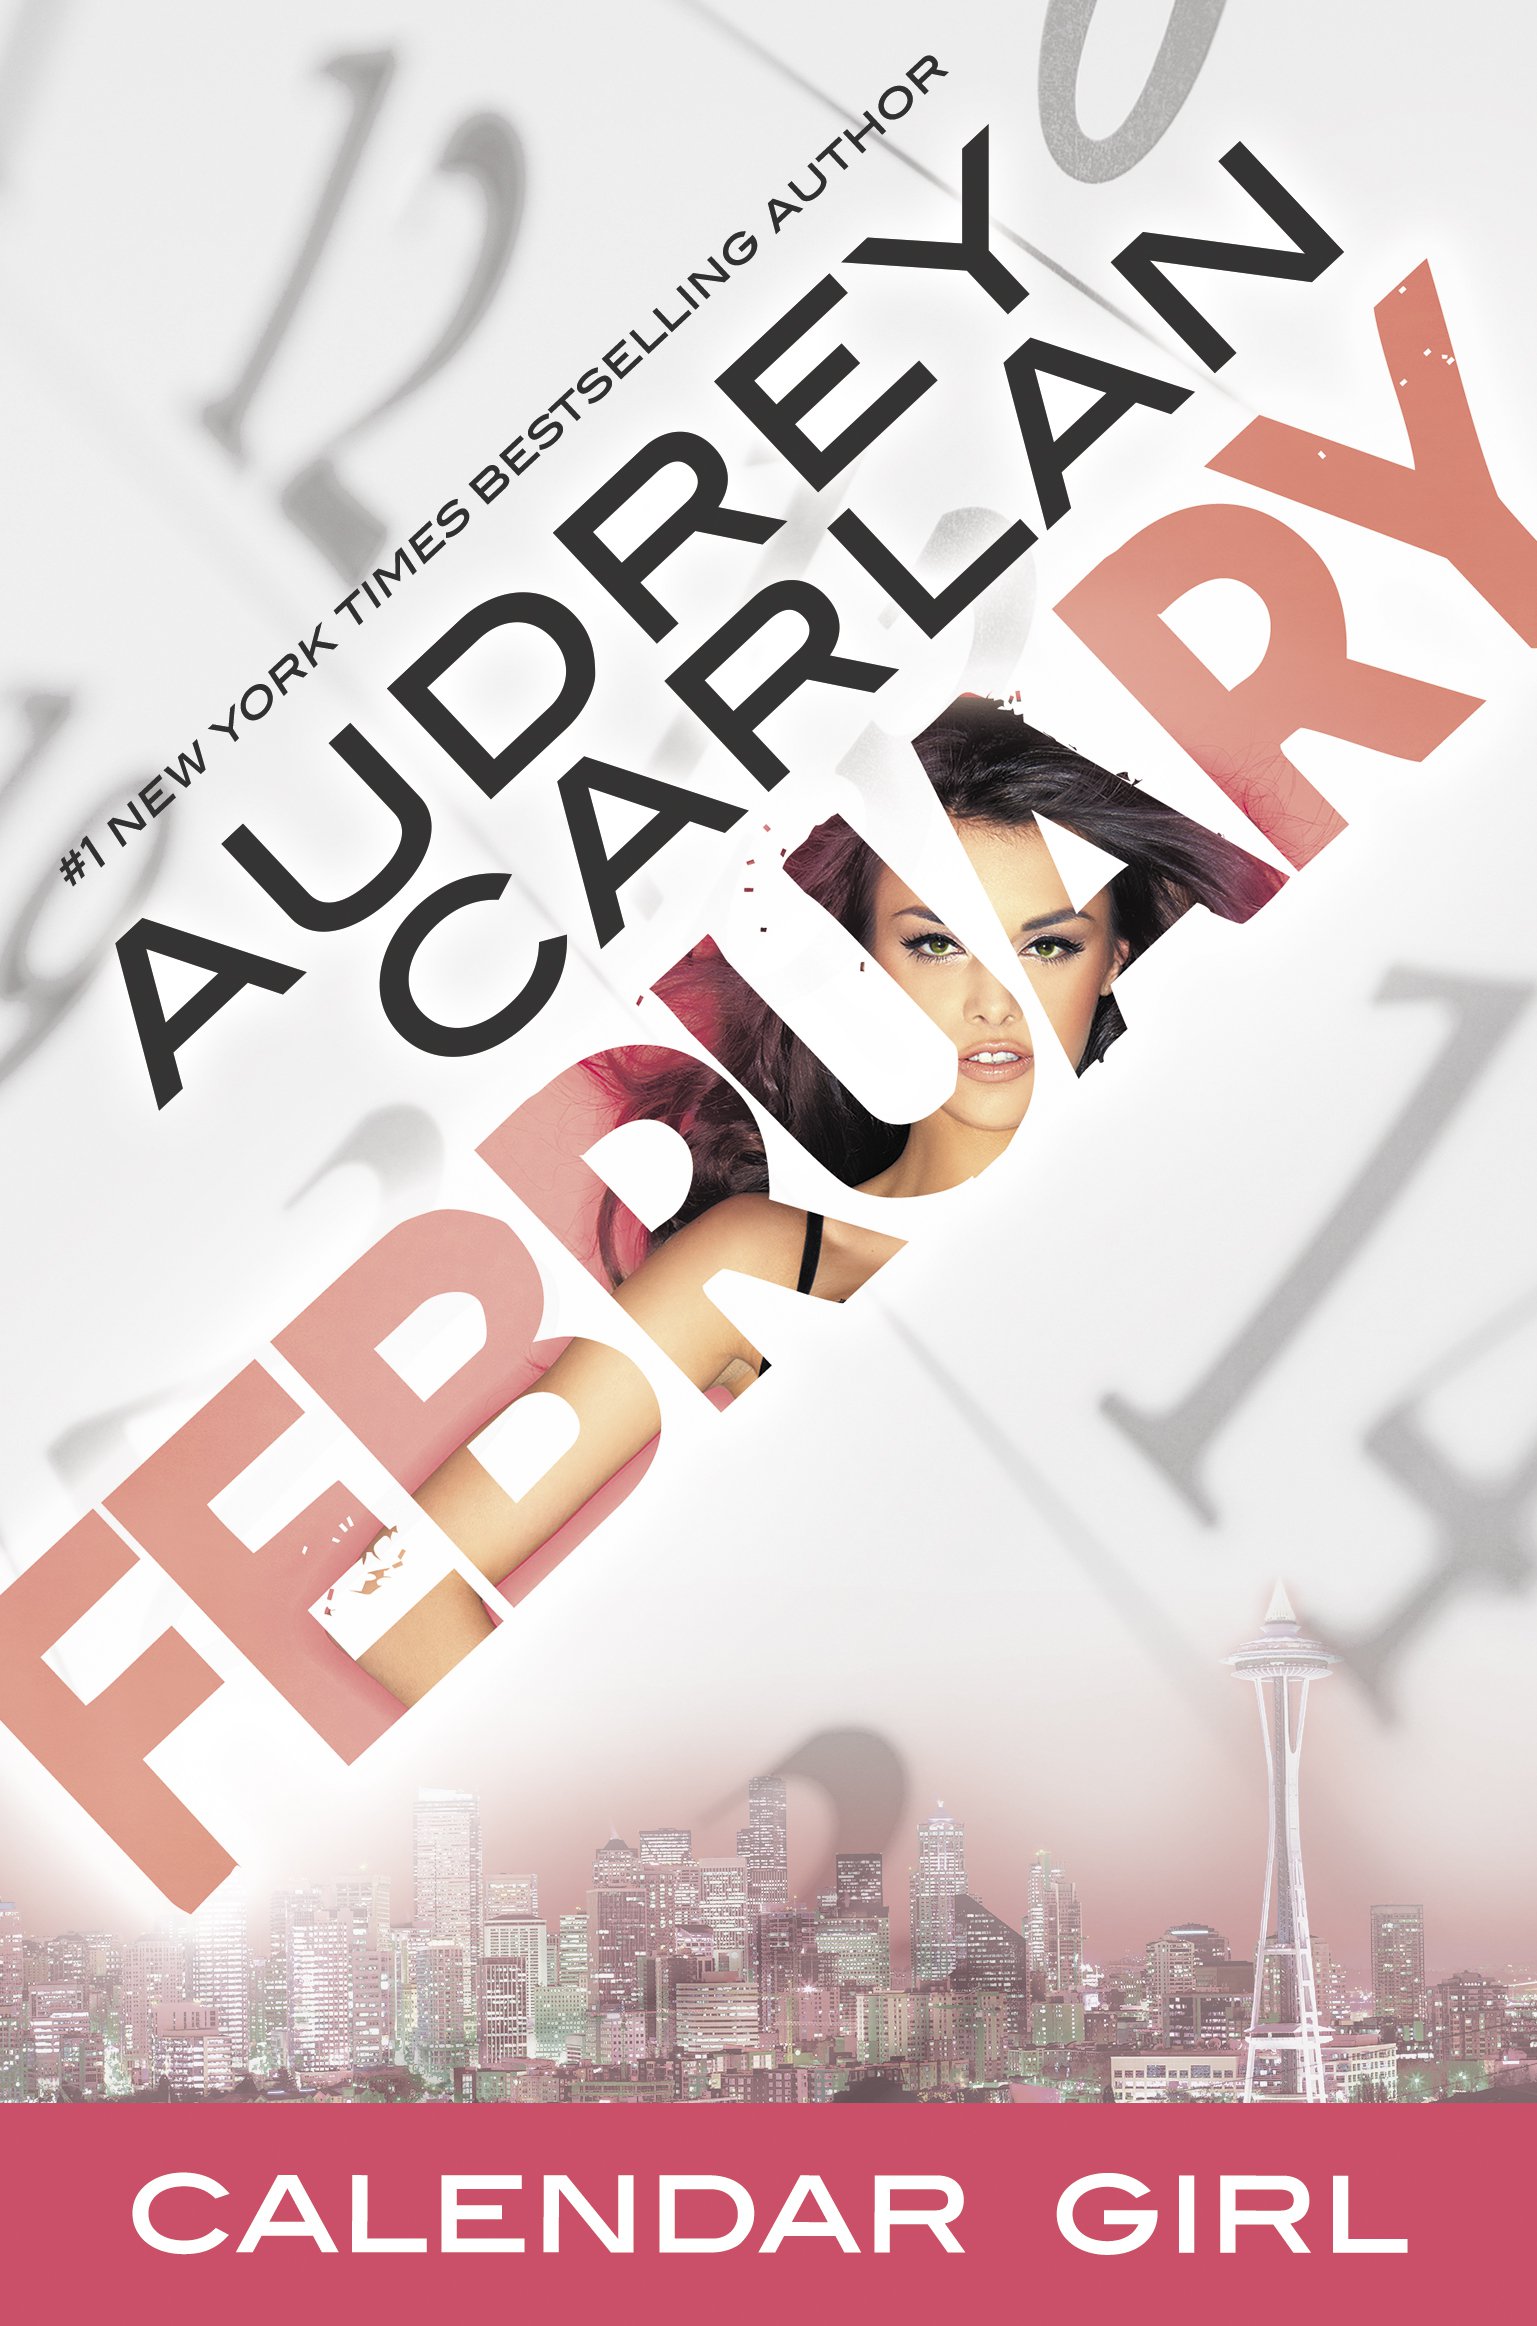 Audrey Carlan February